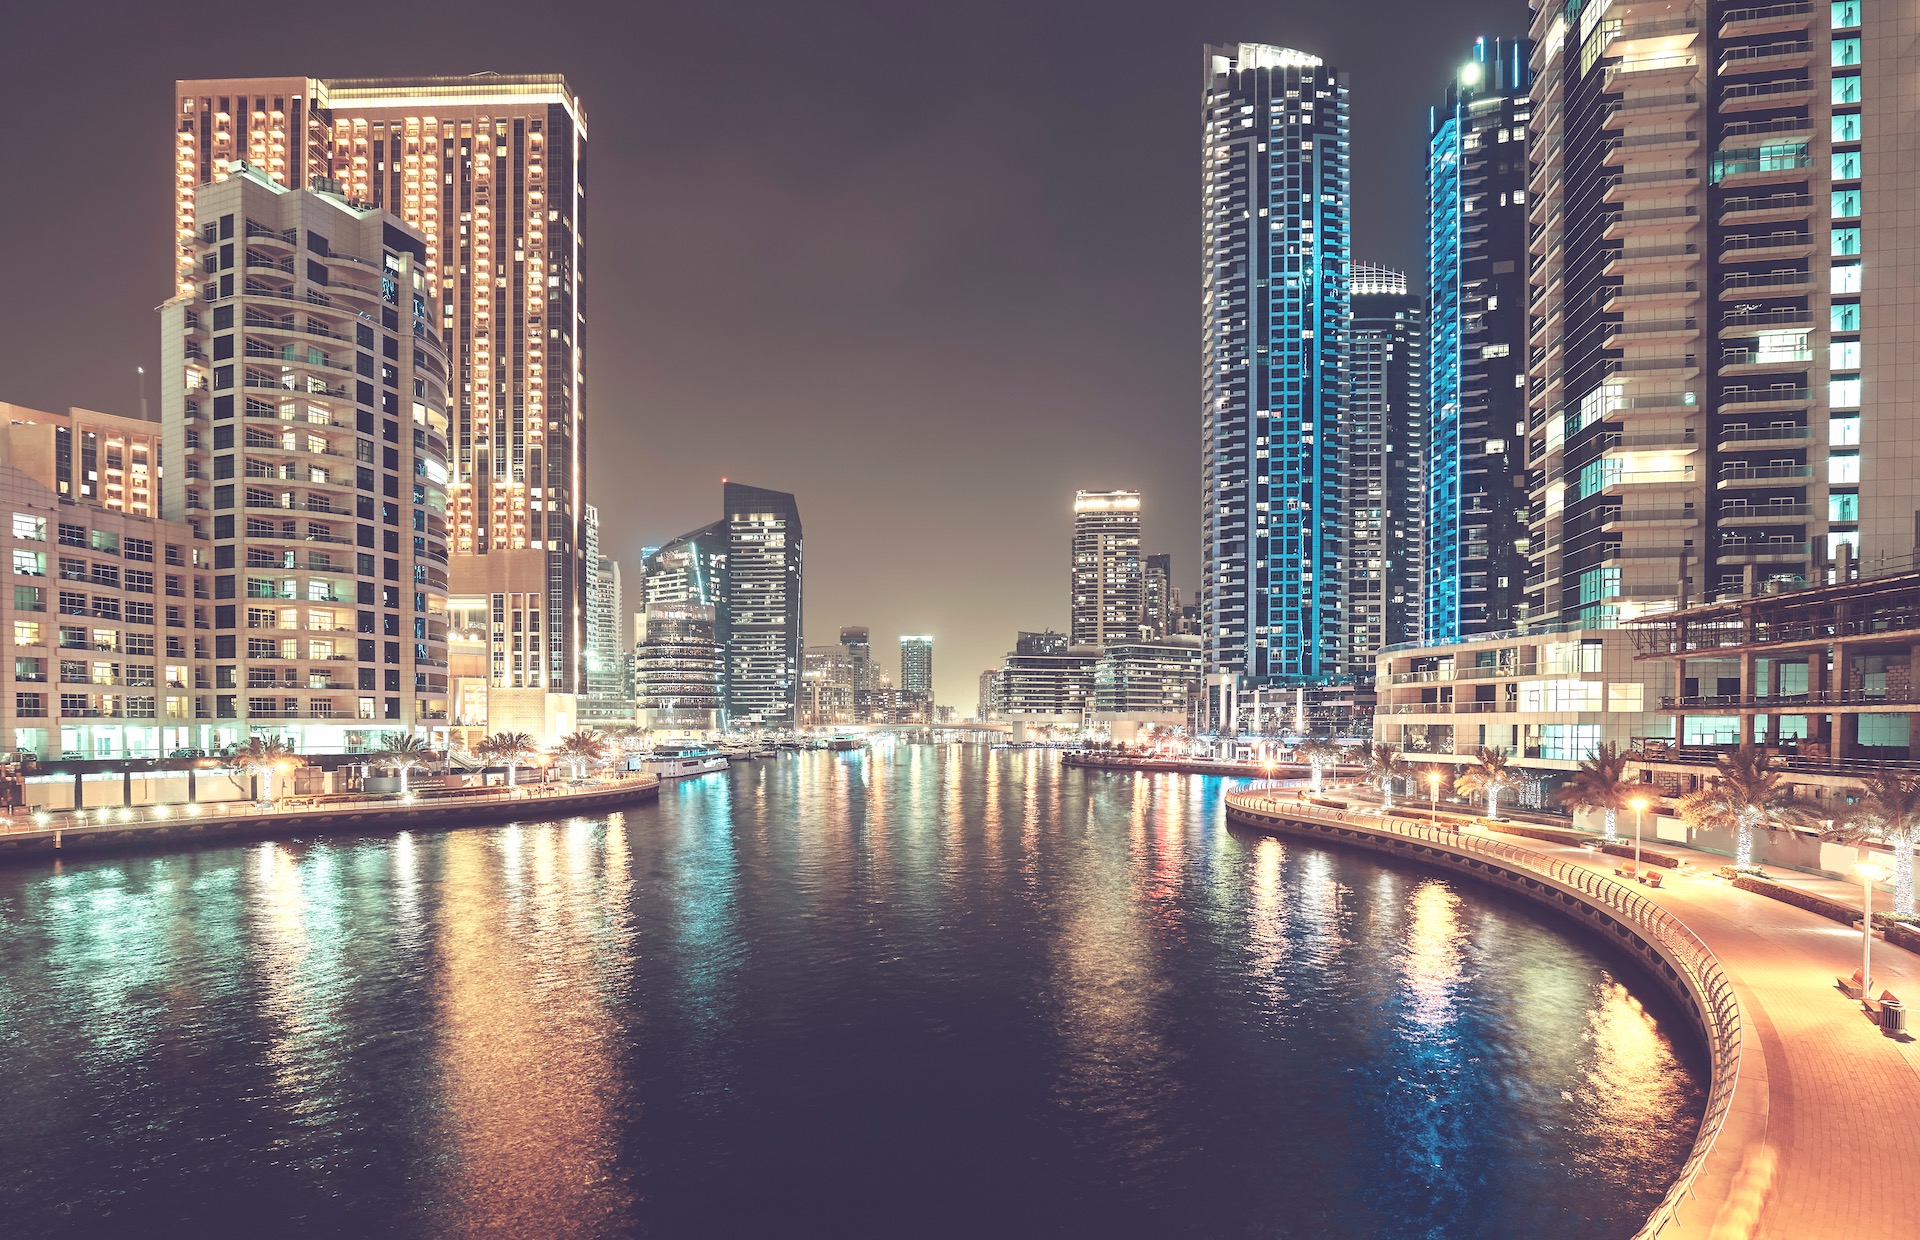 An image of the city of Dubai